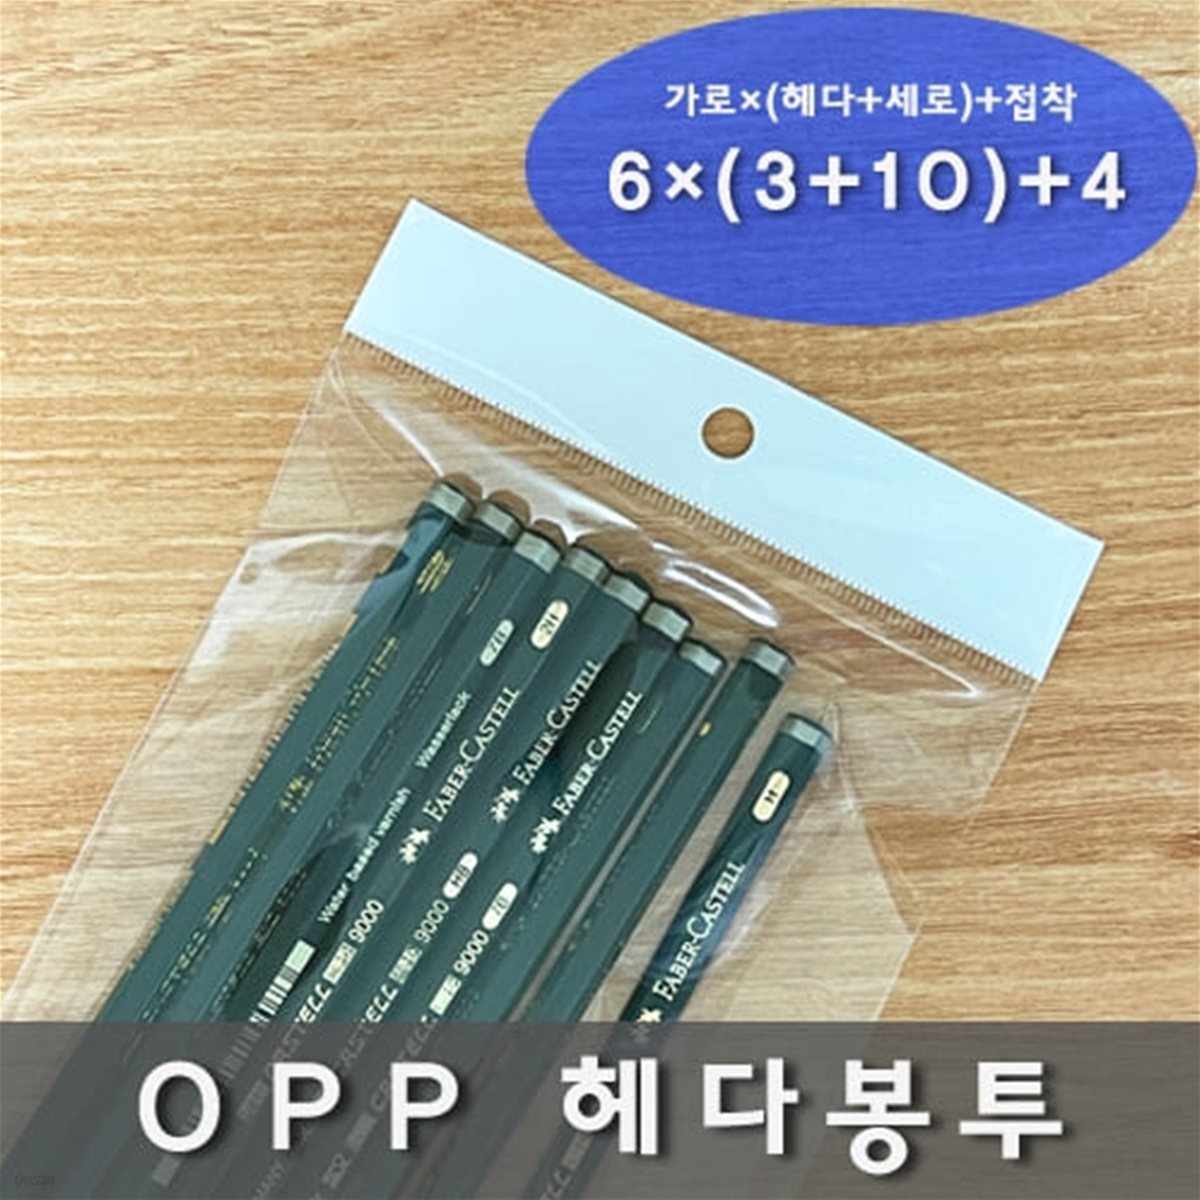 OPP 헤다봉투 6×(3+10)+4 200매